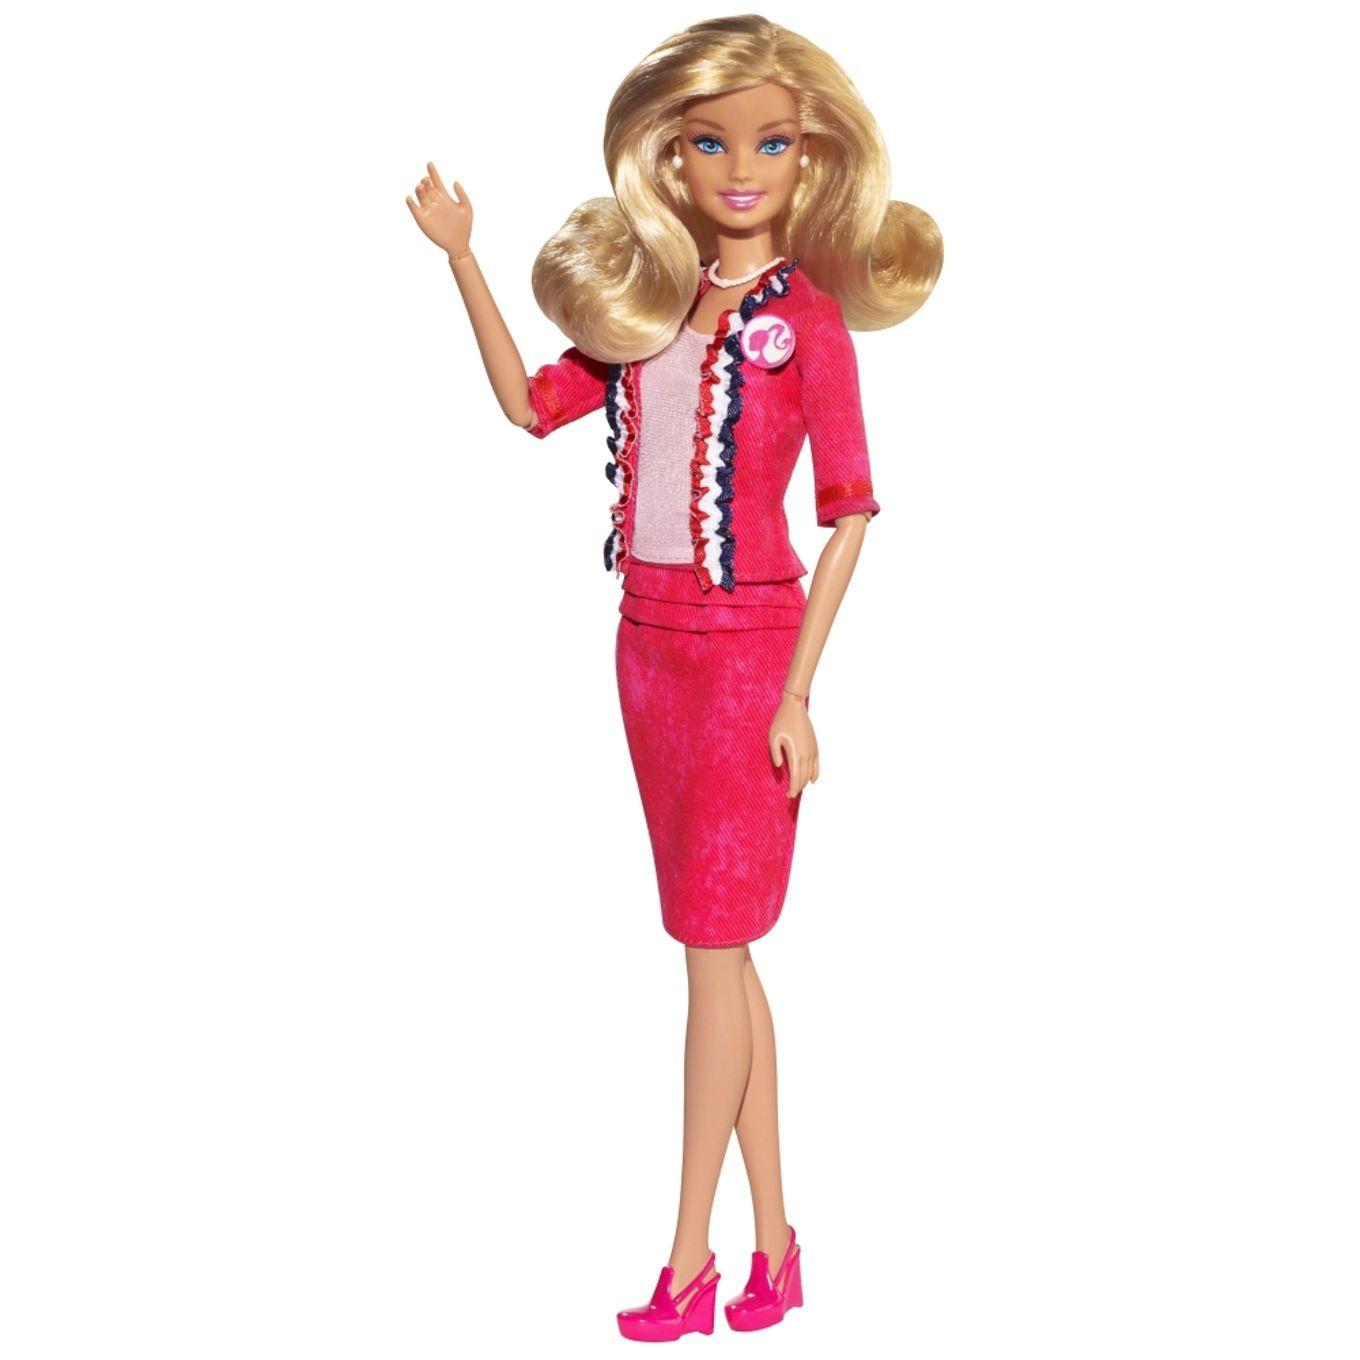 Pretty, Barbie Doll Games Online Dolls Wallpaper Download House